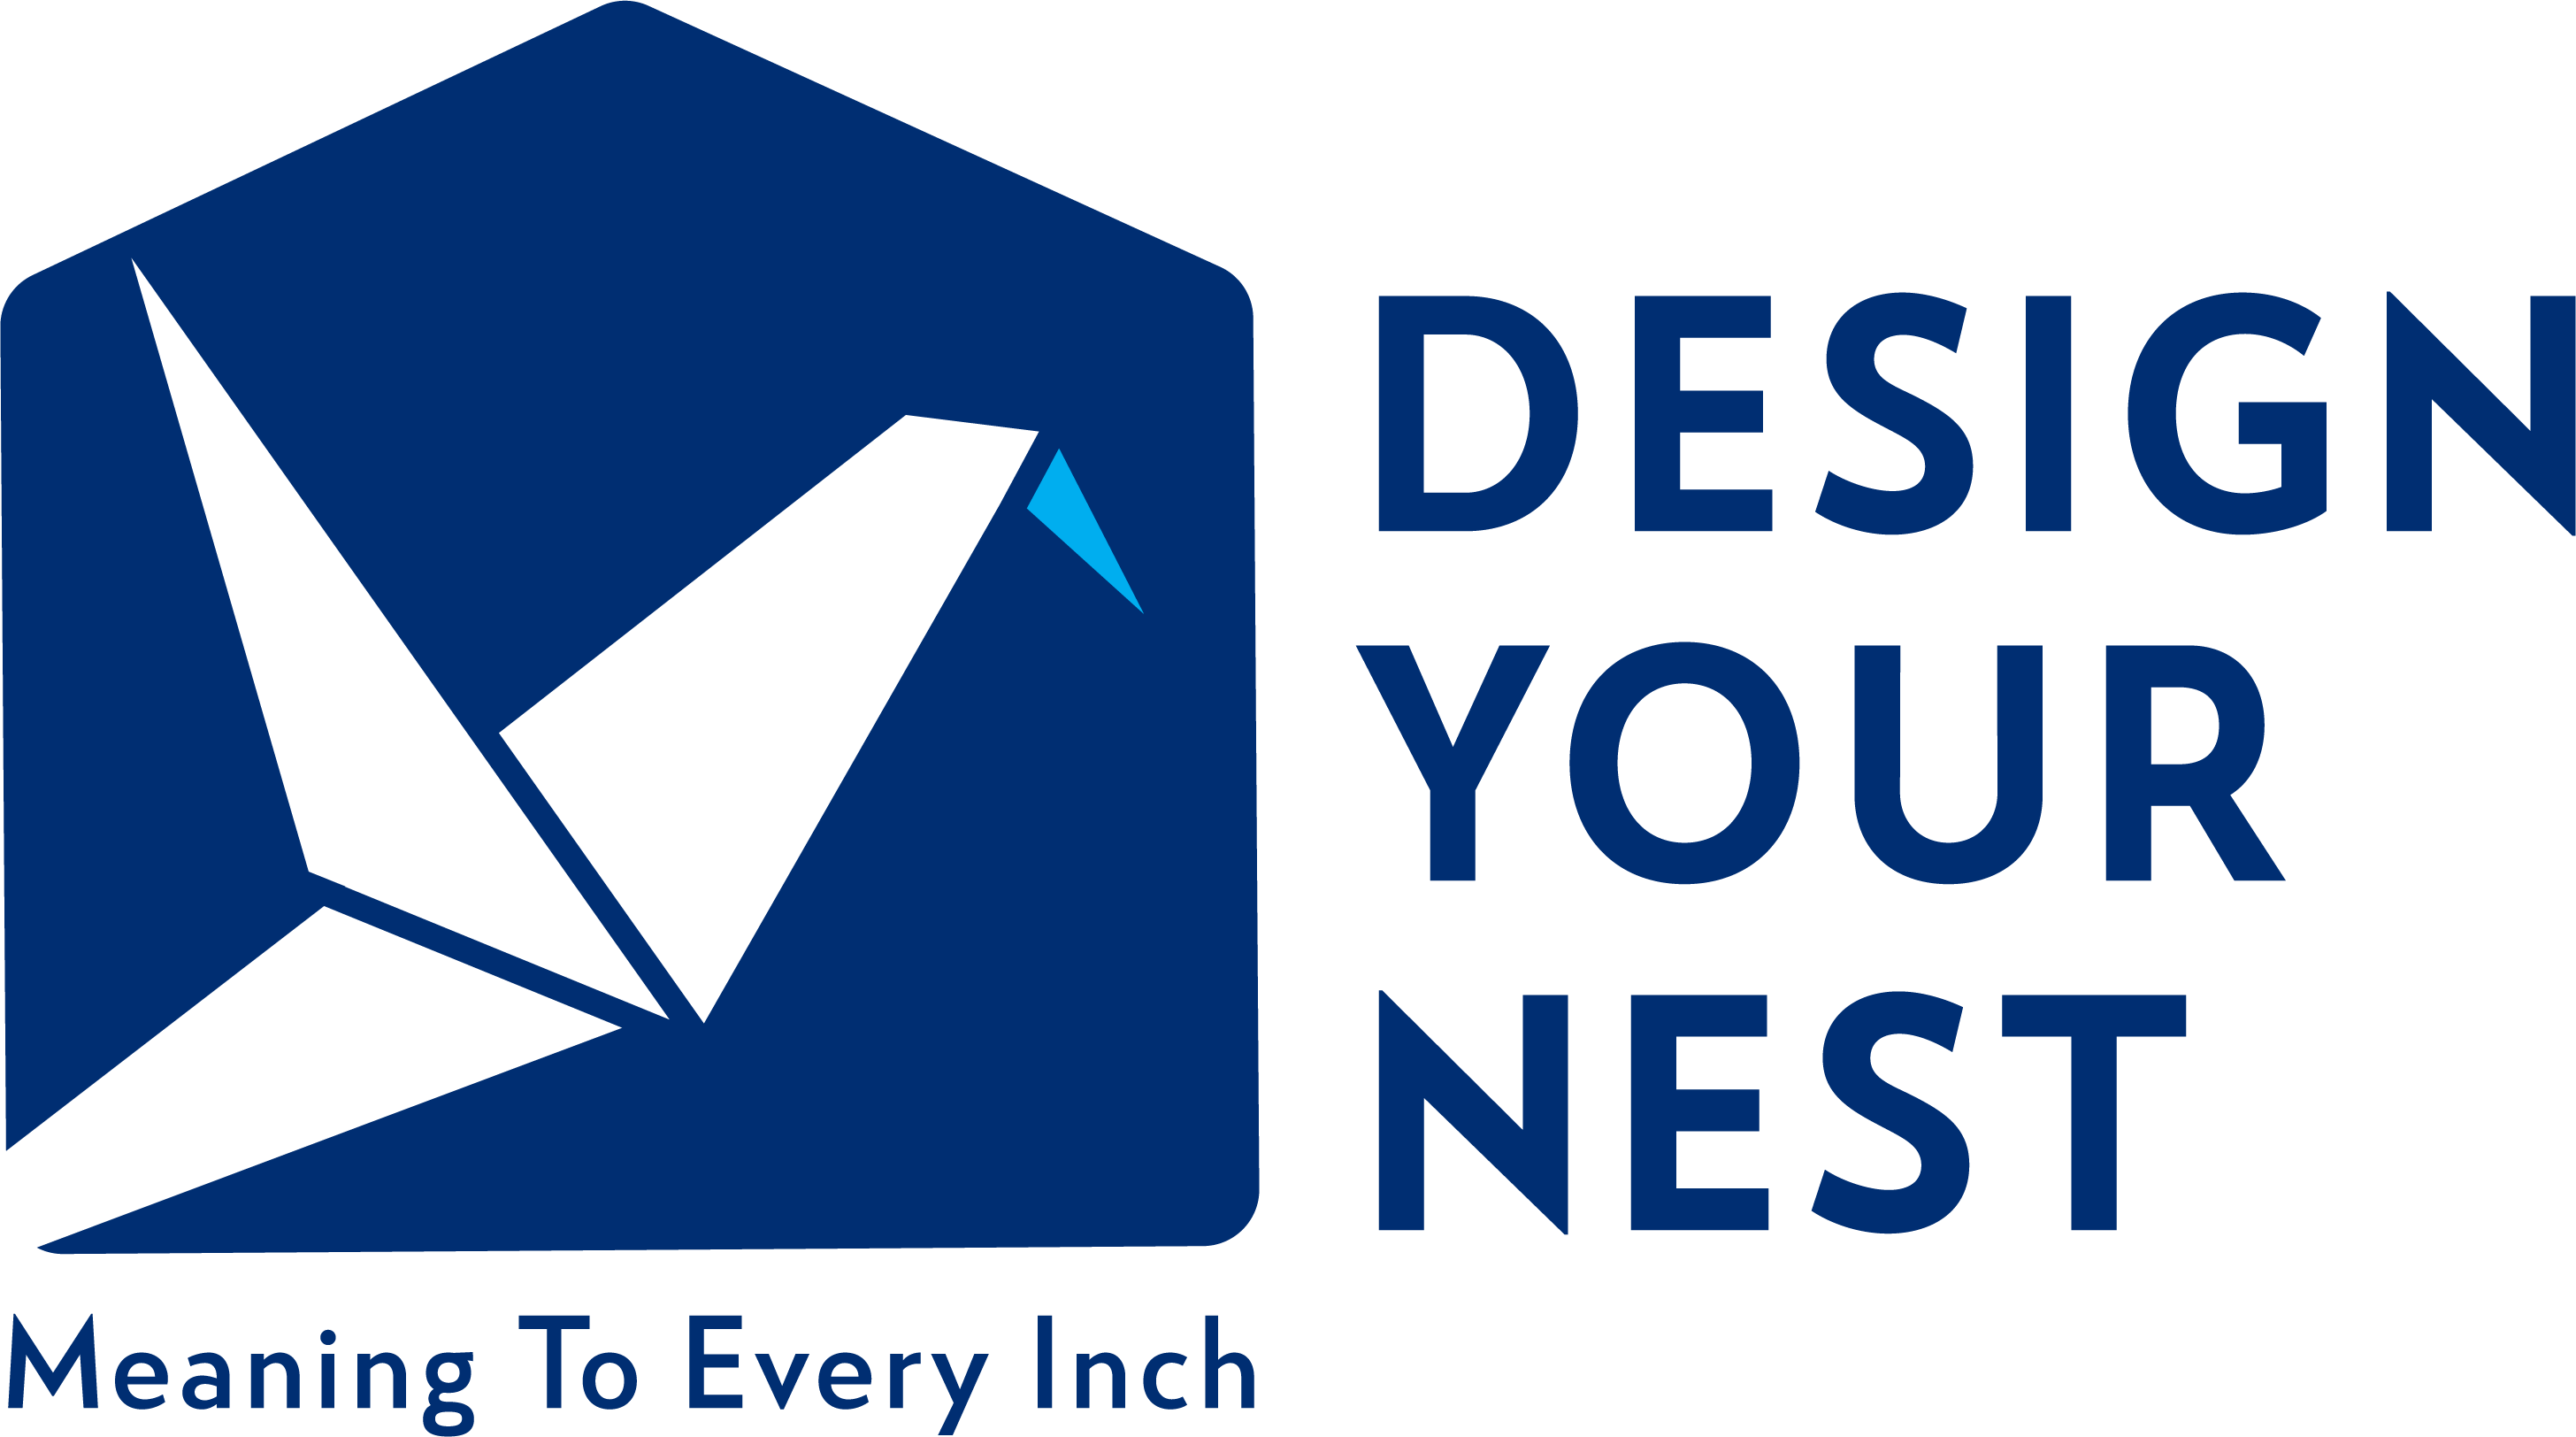 Design your Nest